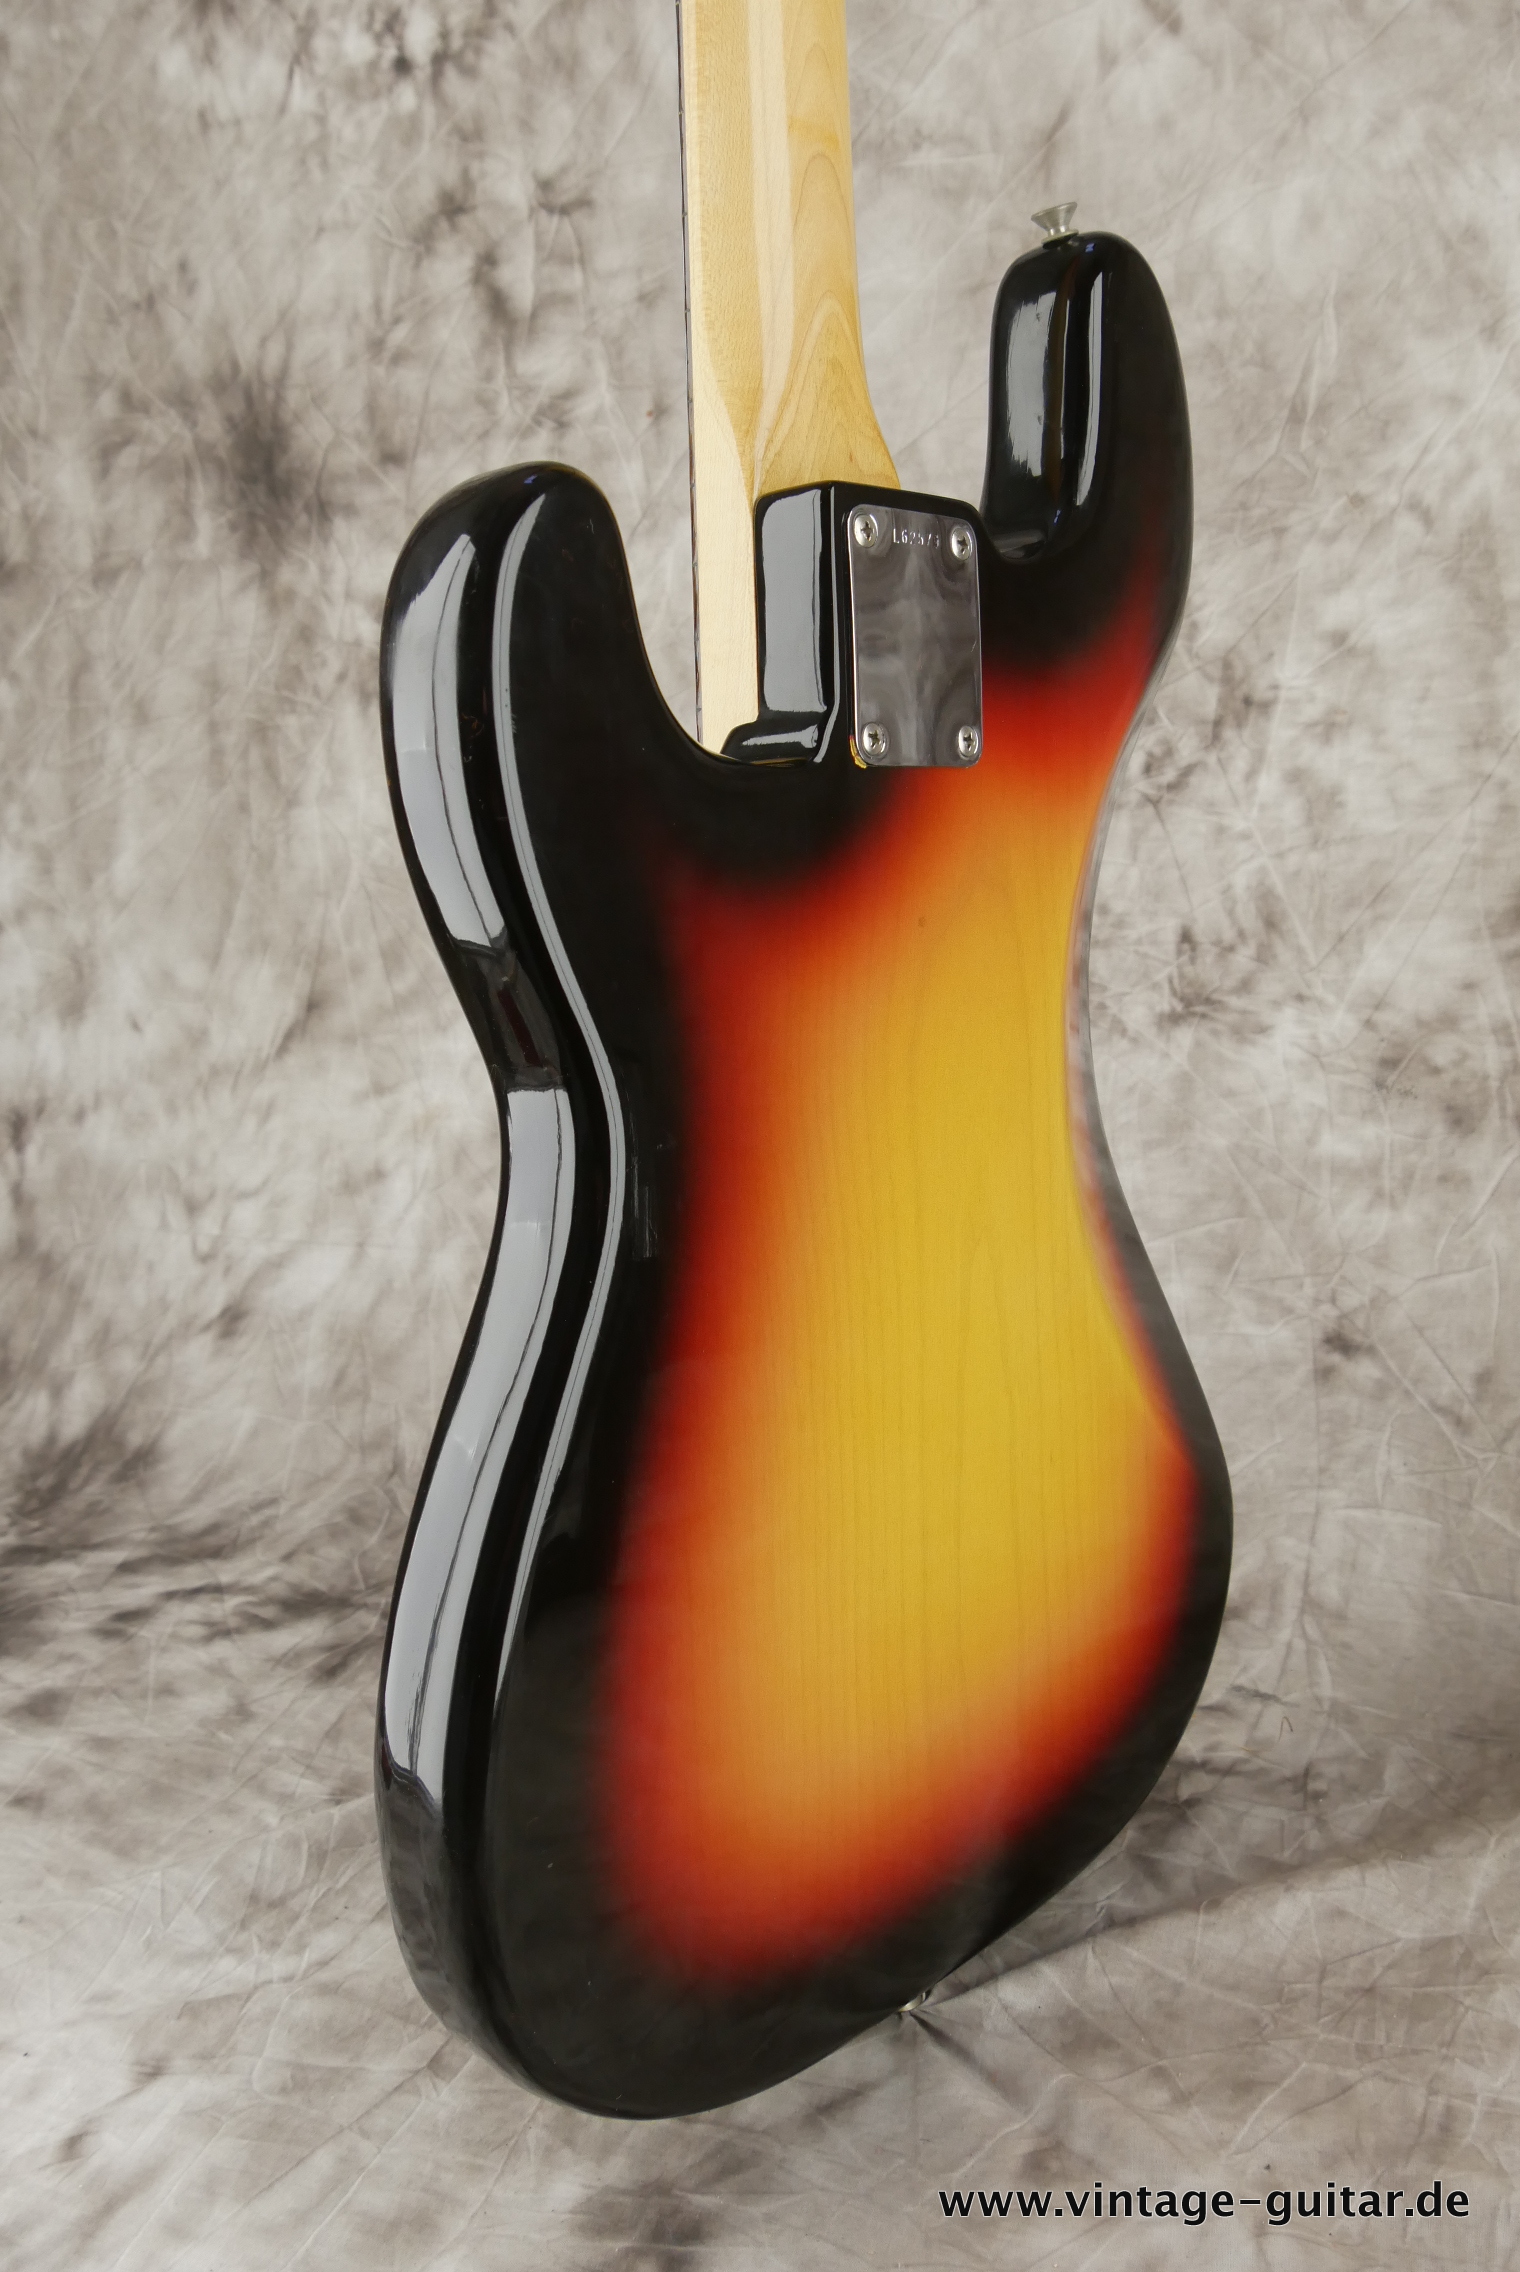 Fender-Precision-Bass-1965-sunburst-mint-condition-007.JPG